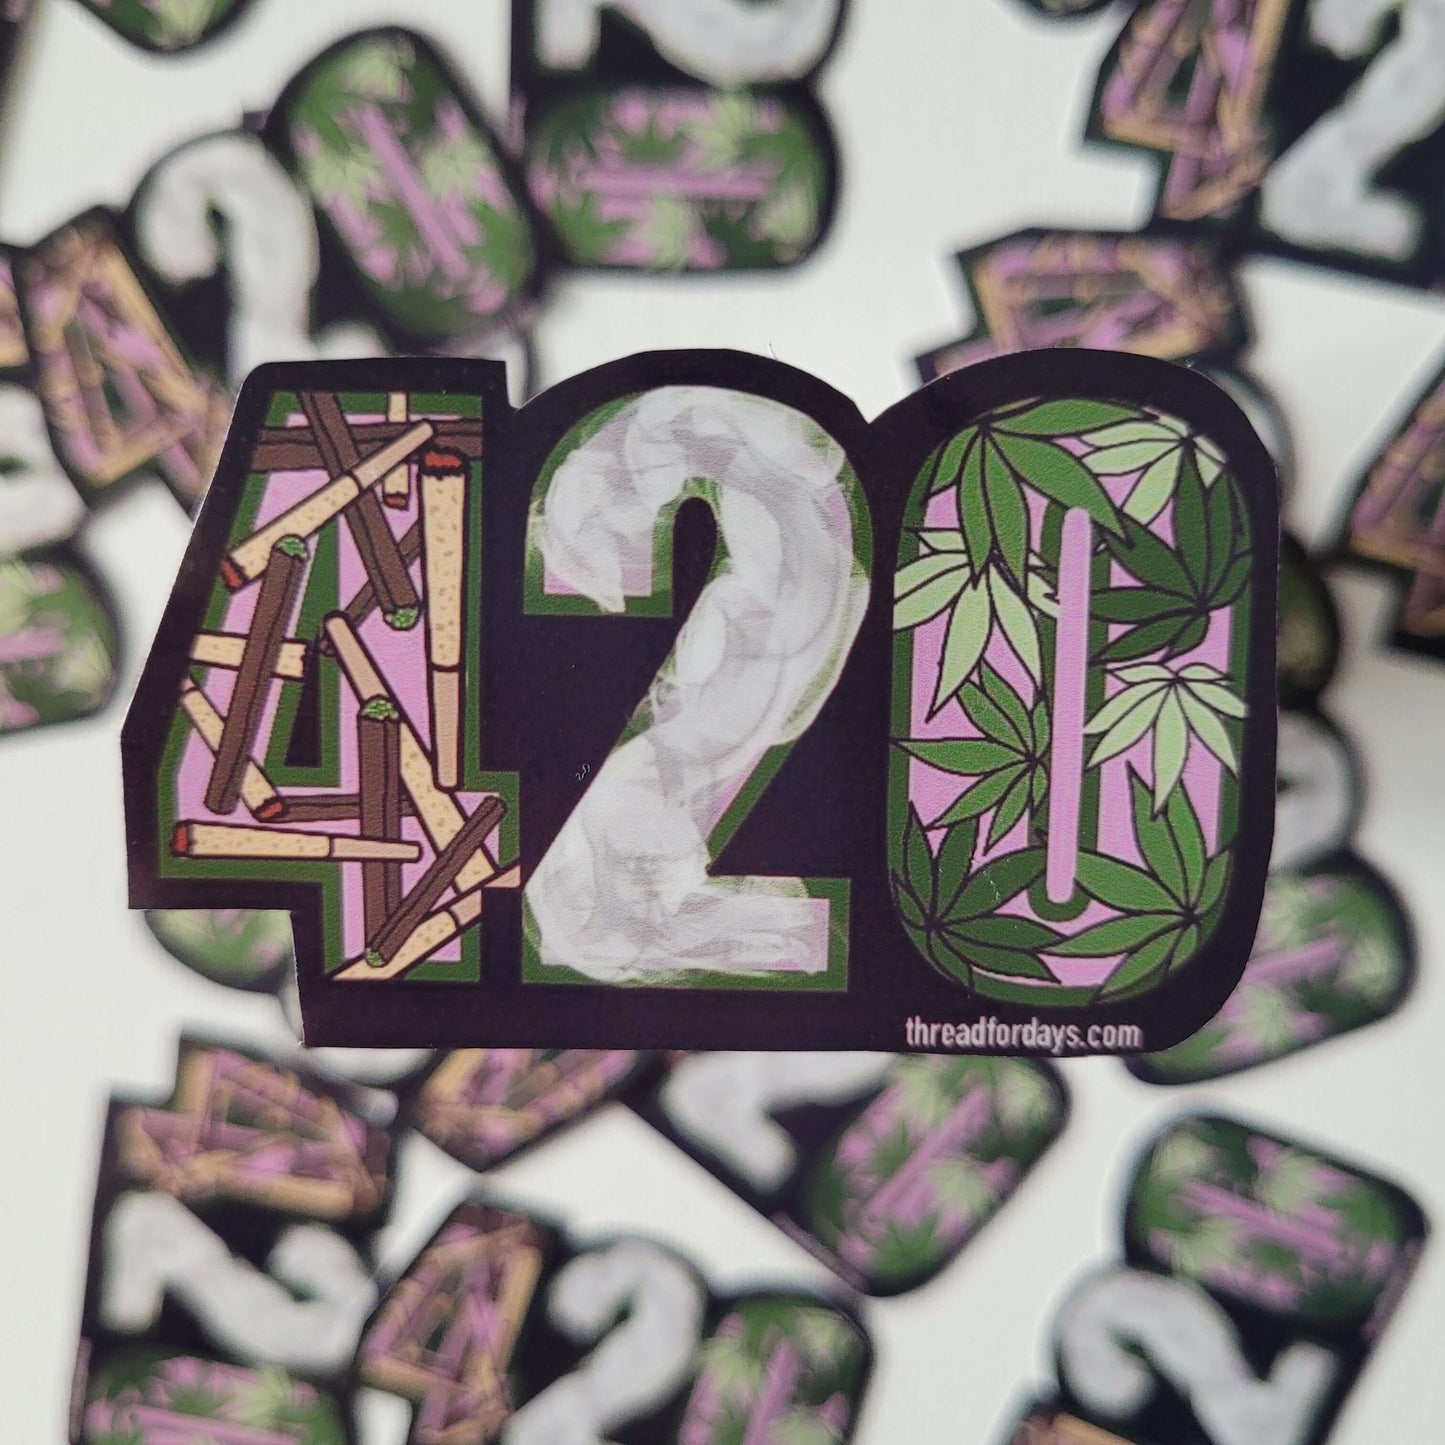 420 sticker close up